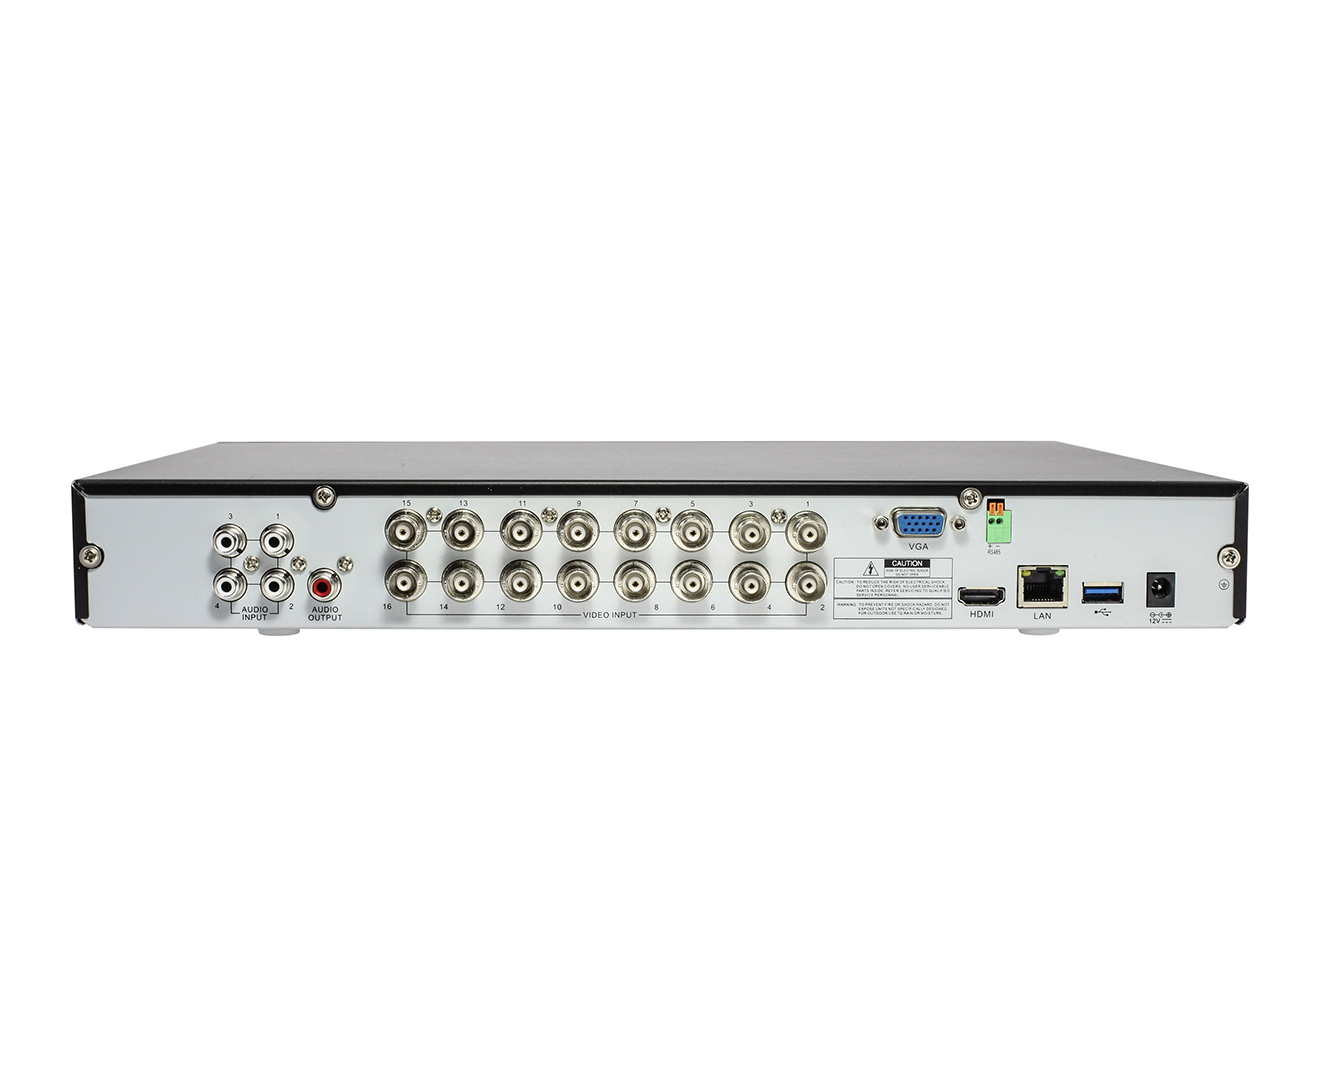 Swann 16-Channel DVR-4980 5MP DVR Security System & 10 Thermal Imaging Cameras | Catch.com.au